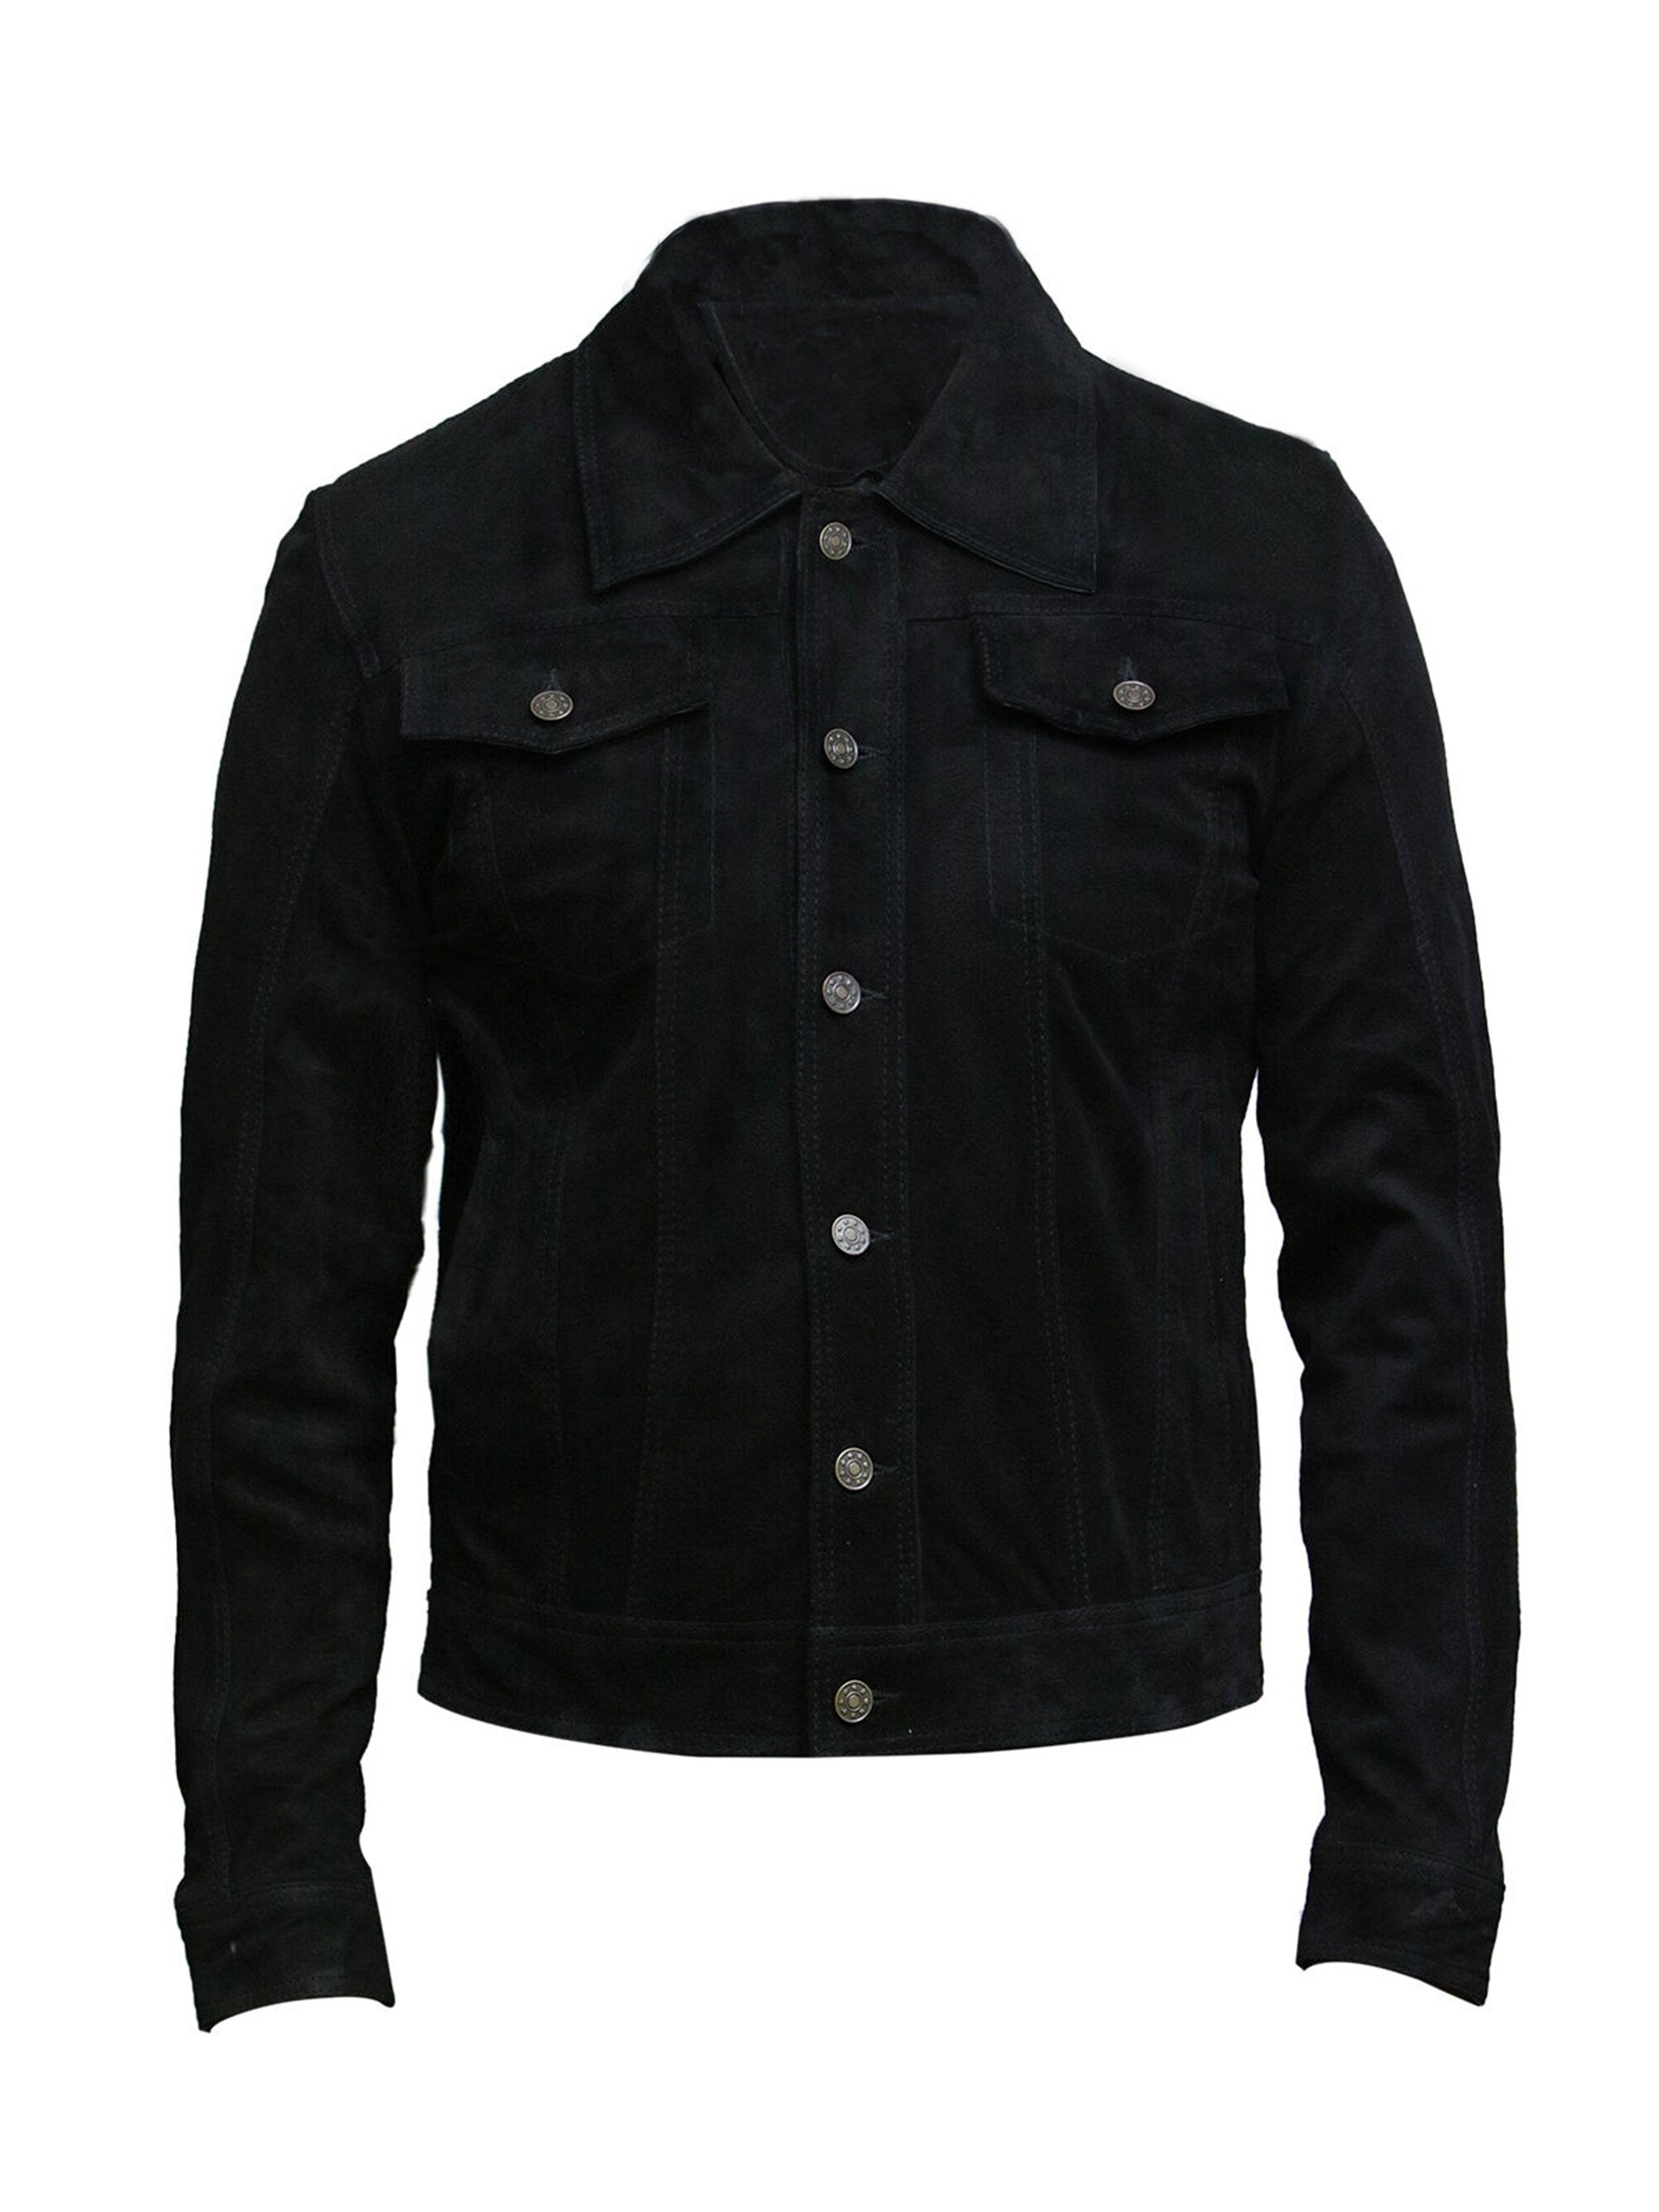 Black Suede Leather Jackets For Men